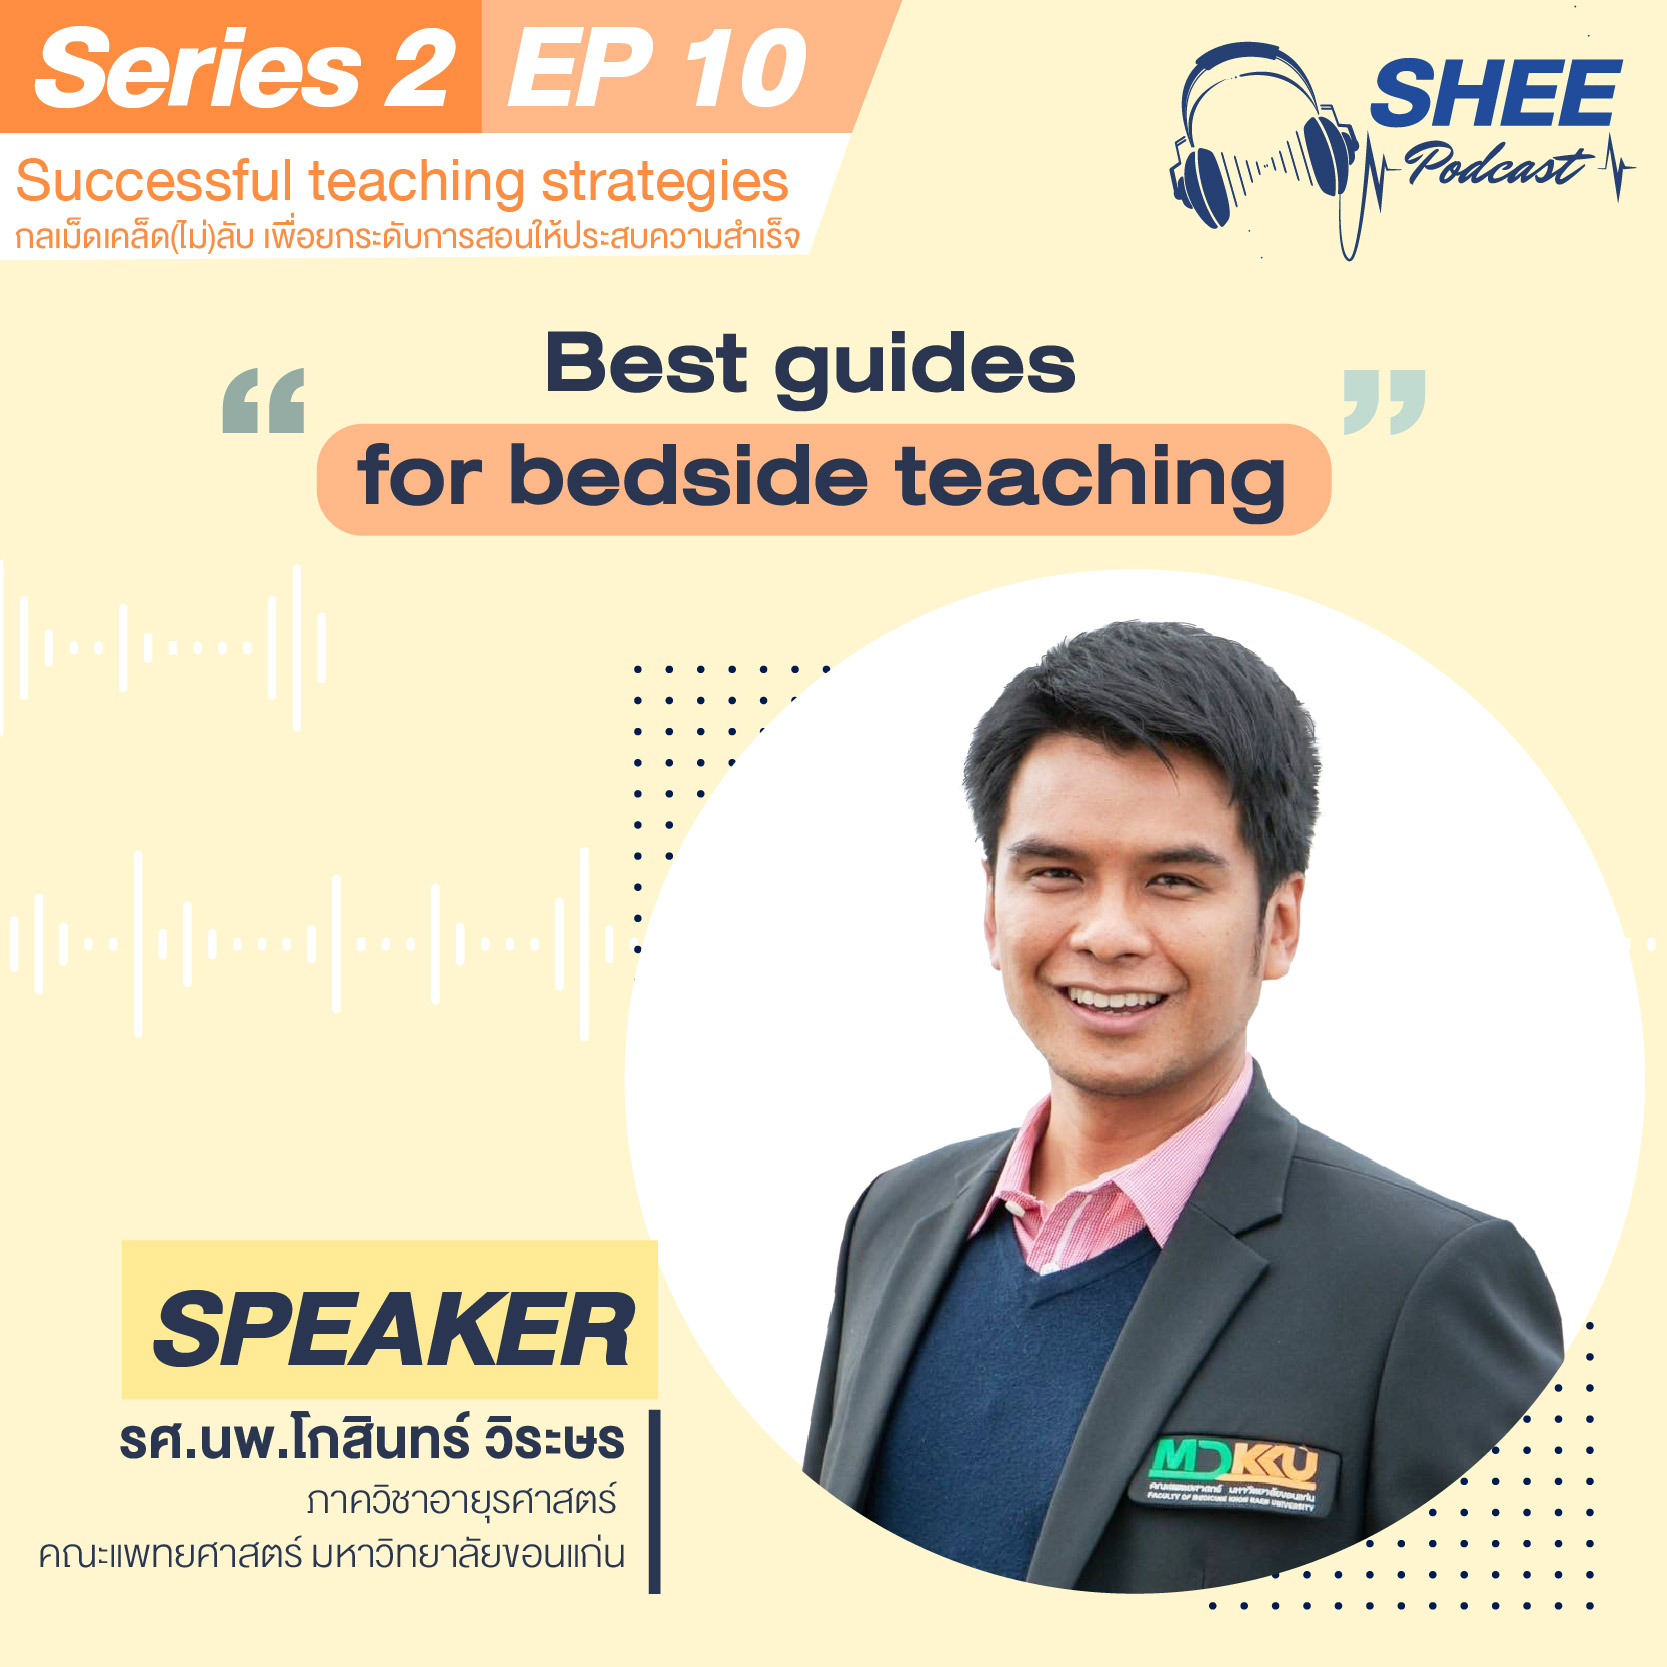 Episode 10 Best guides for bedside teaching